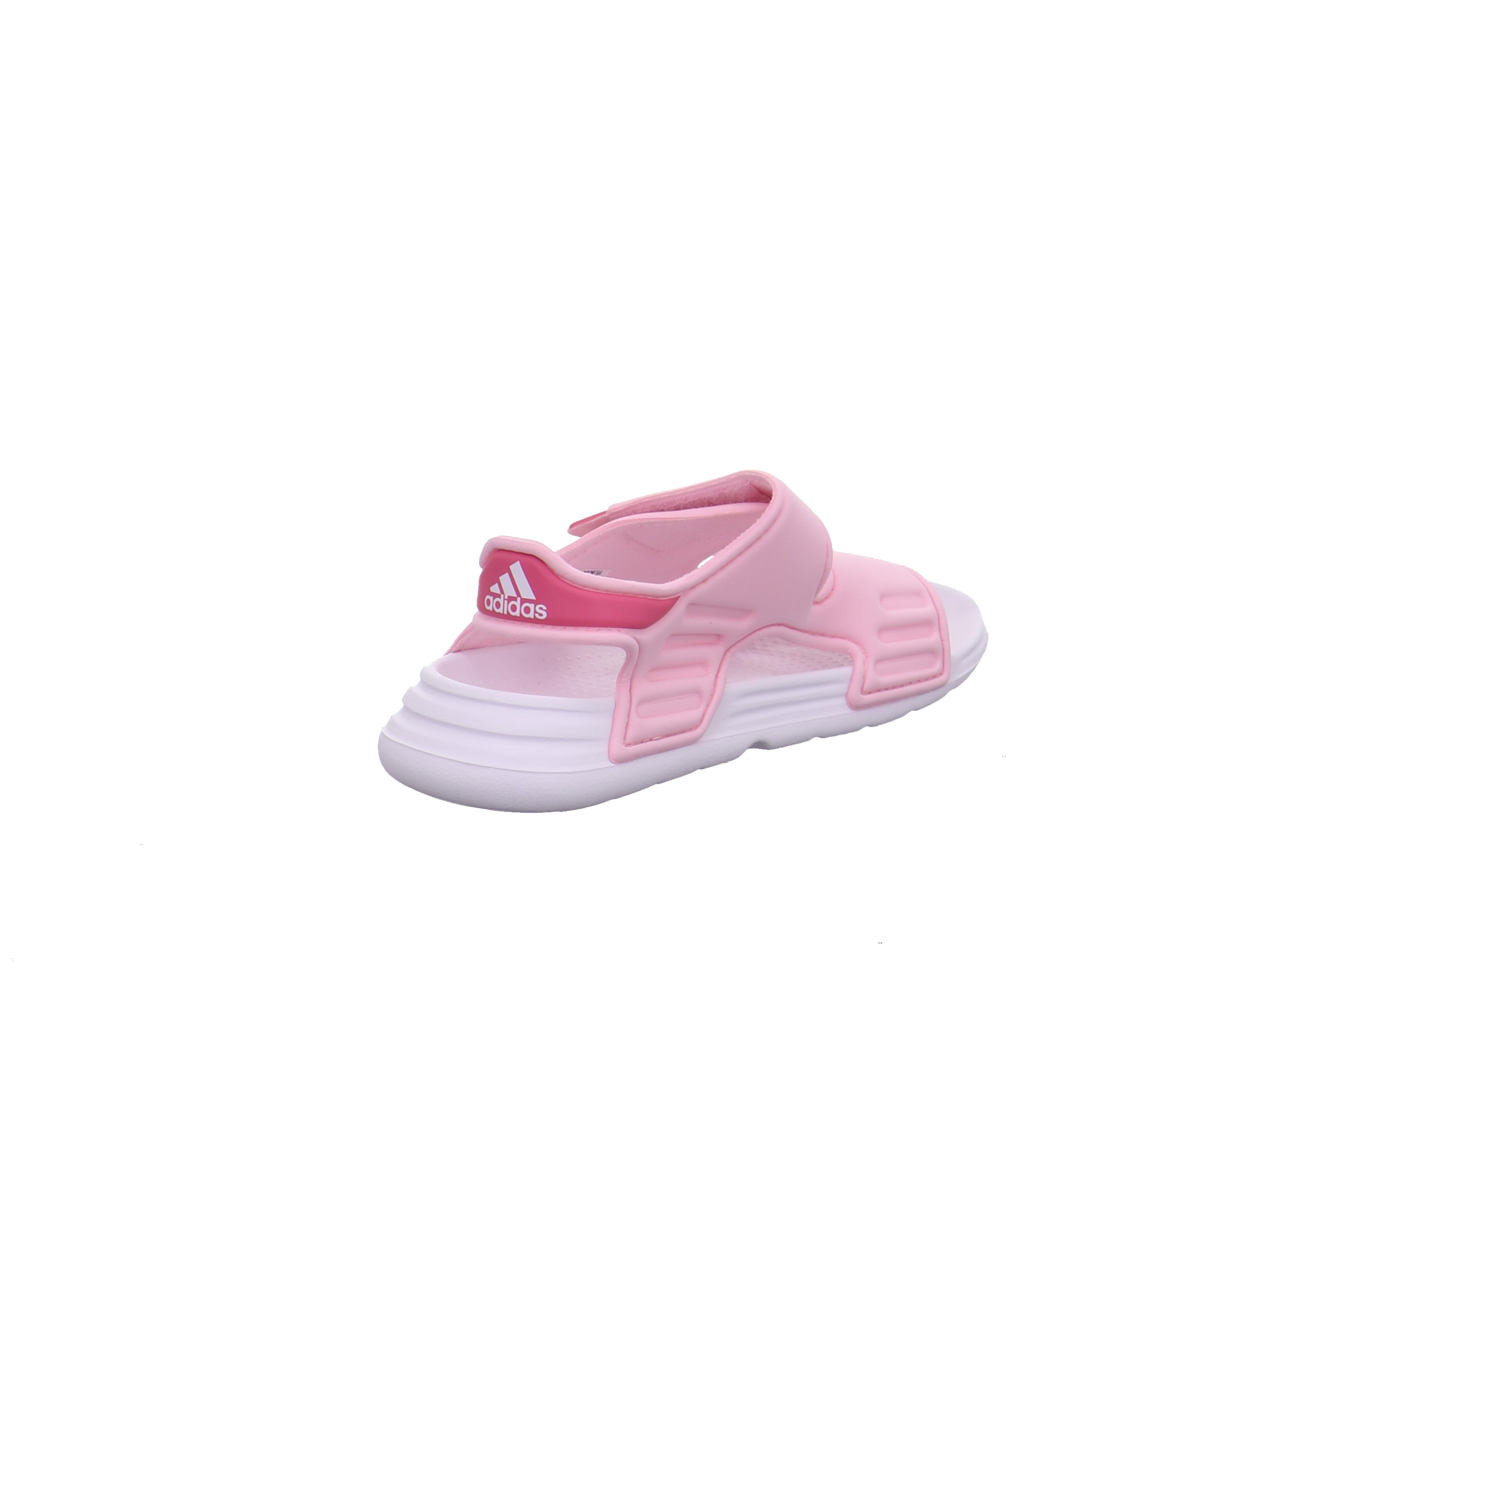 Adidas Offene Schuhe rose Bild5